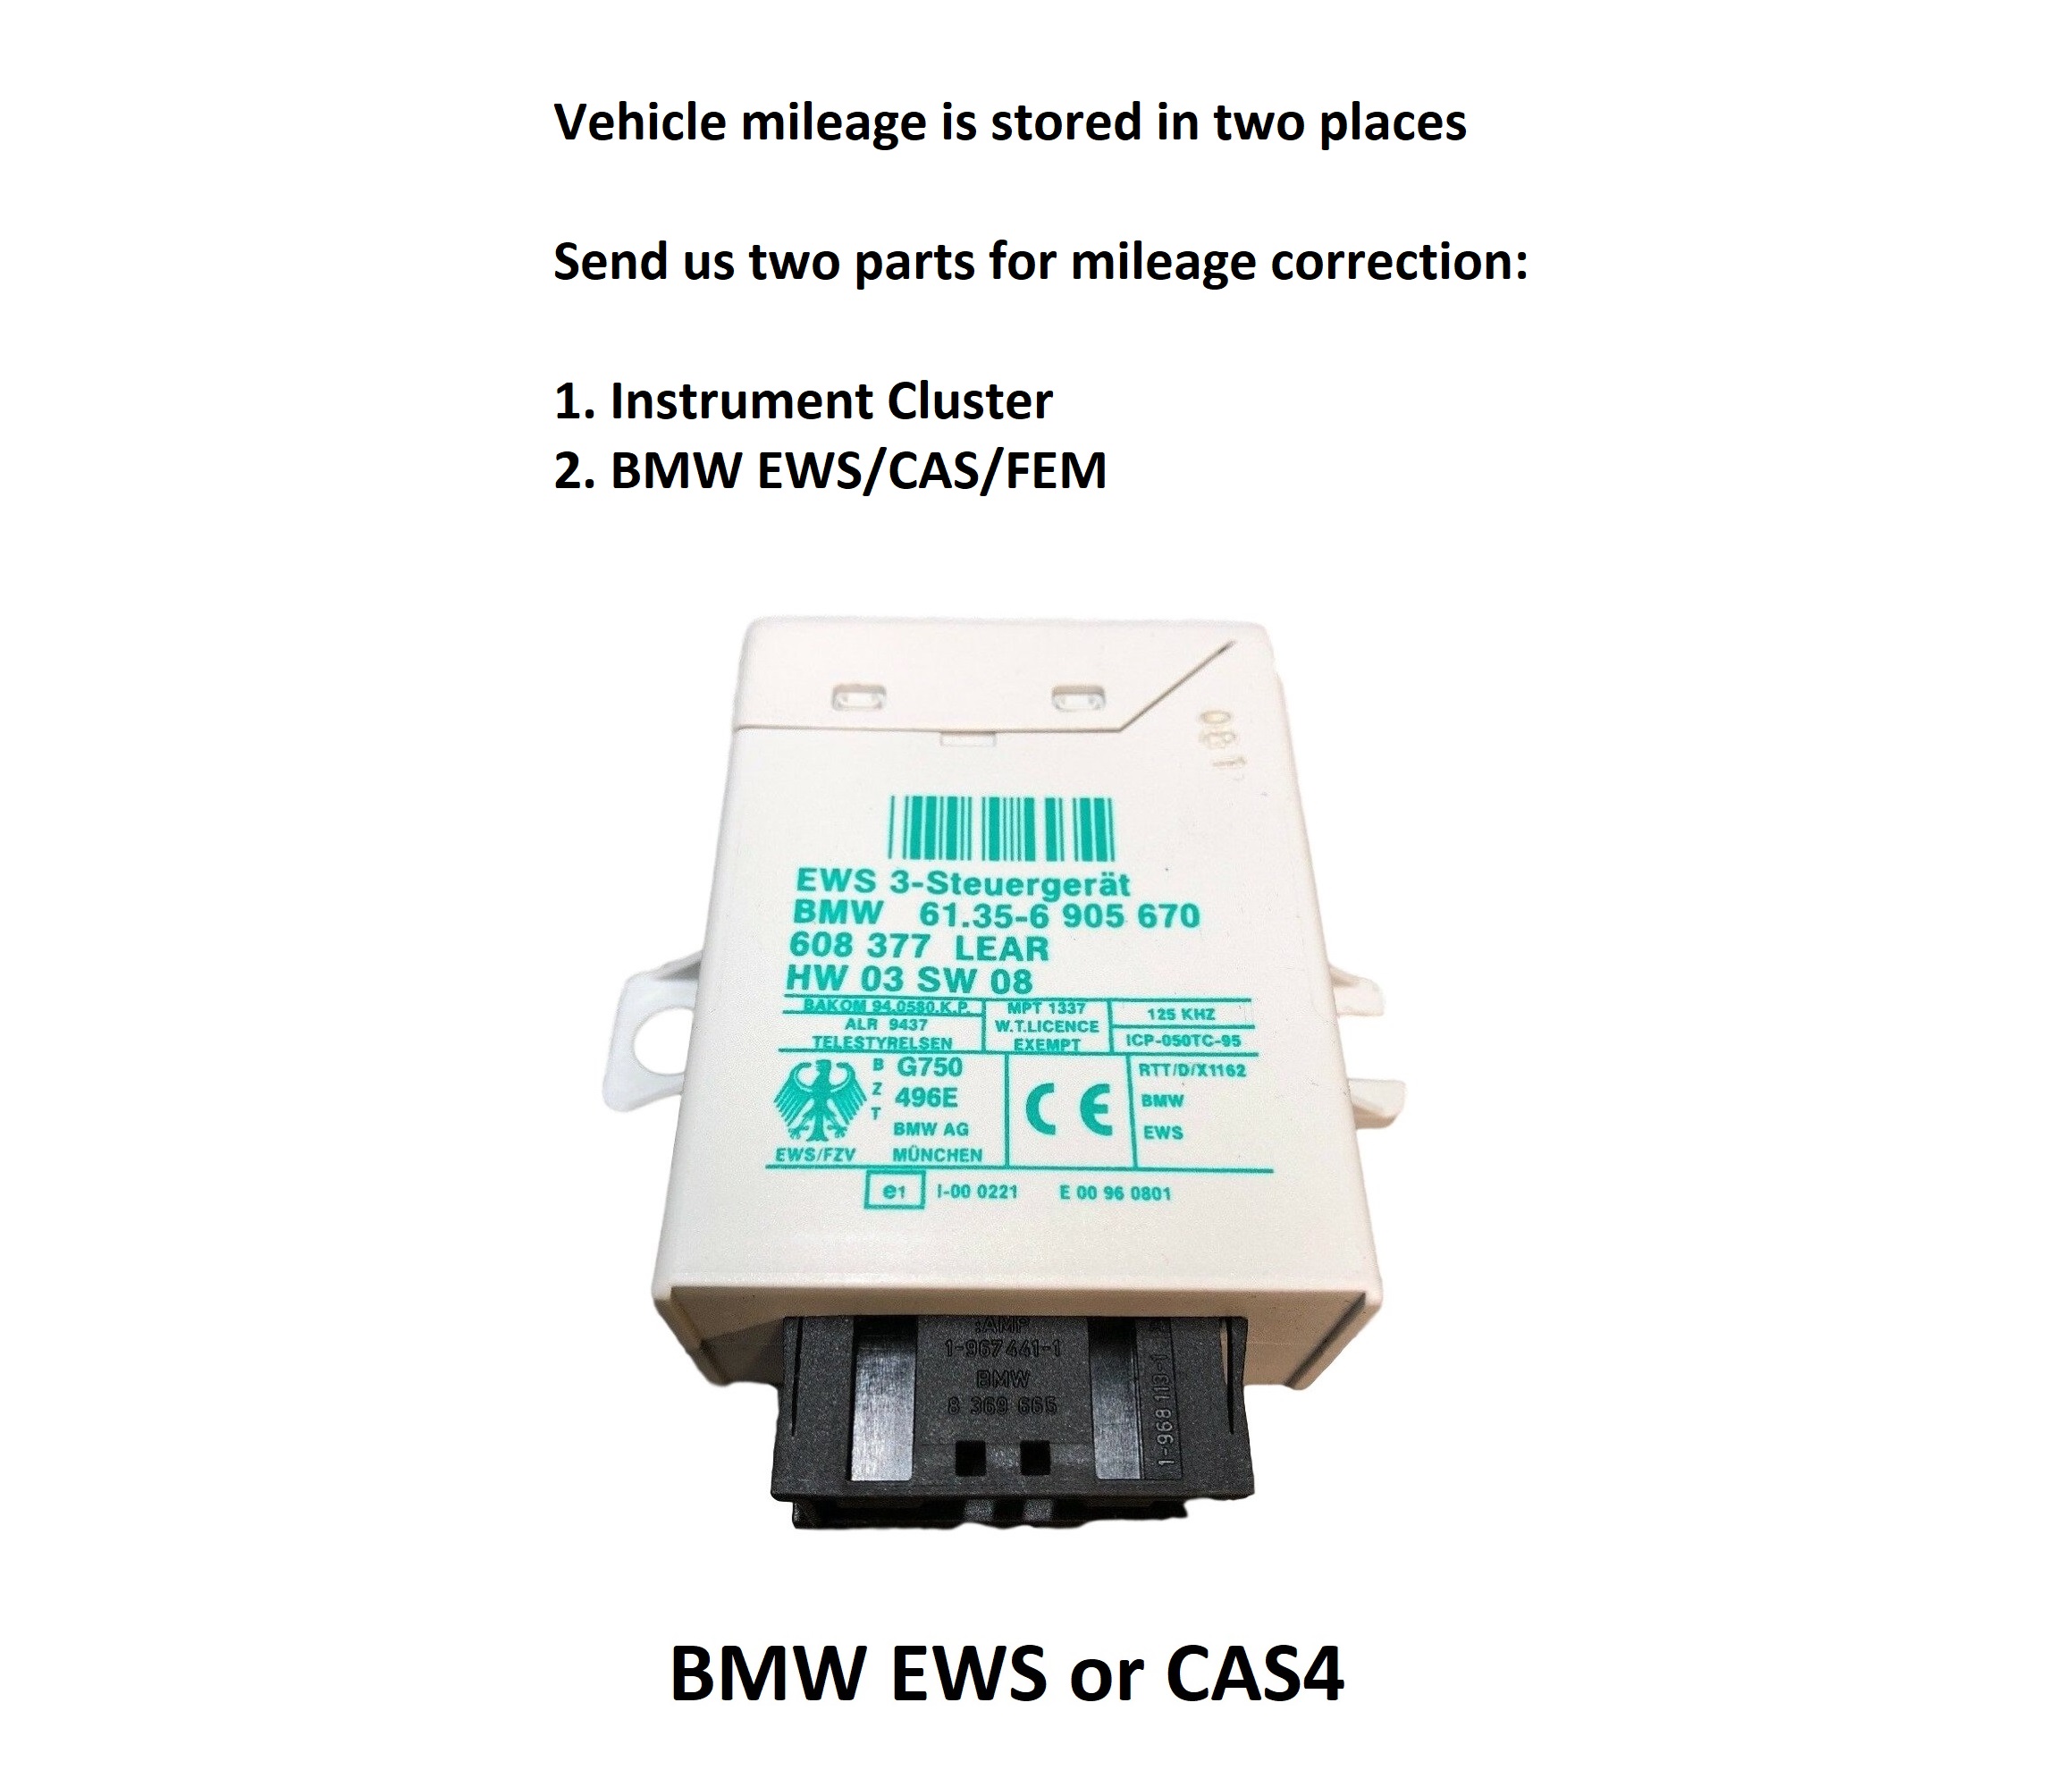 BMW Z8 (1996-2023) Odometer Mileage Adjust Correction Service